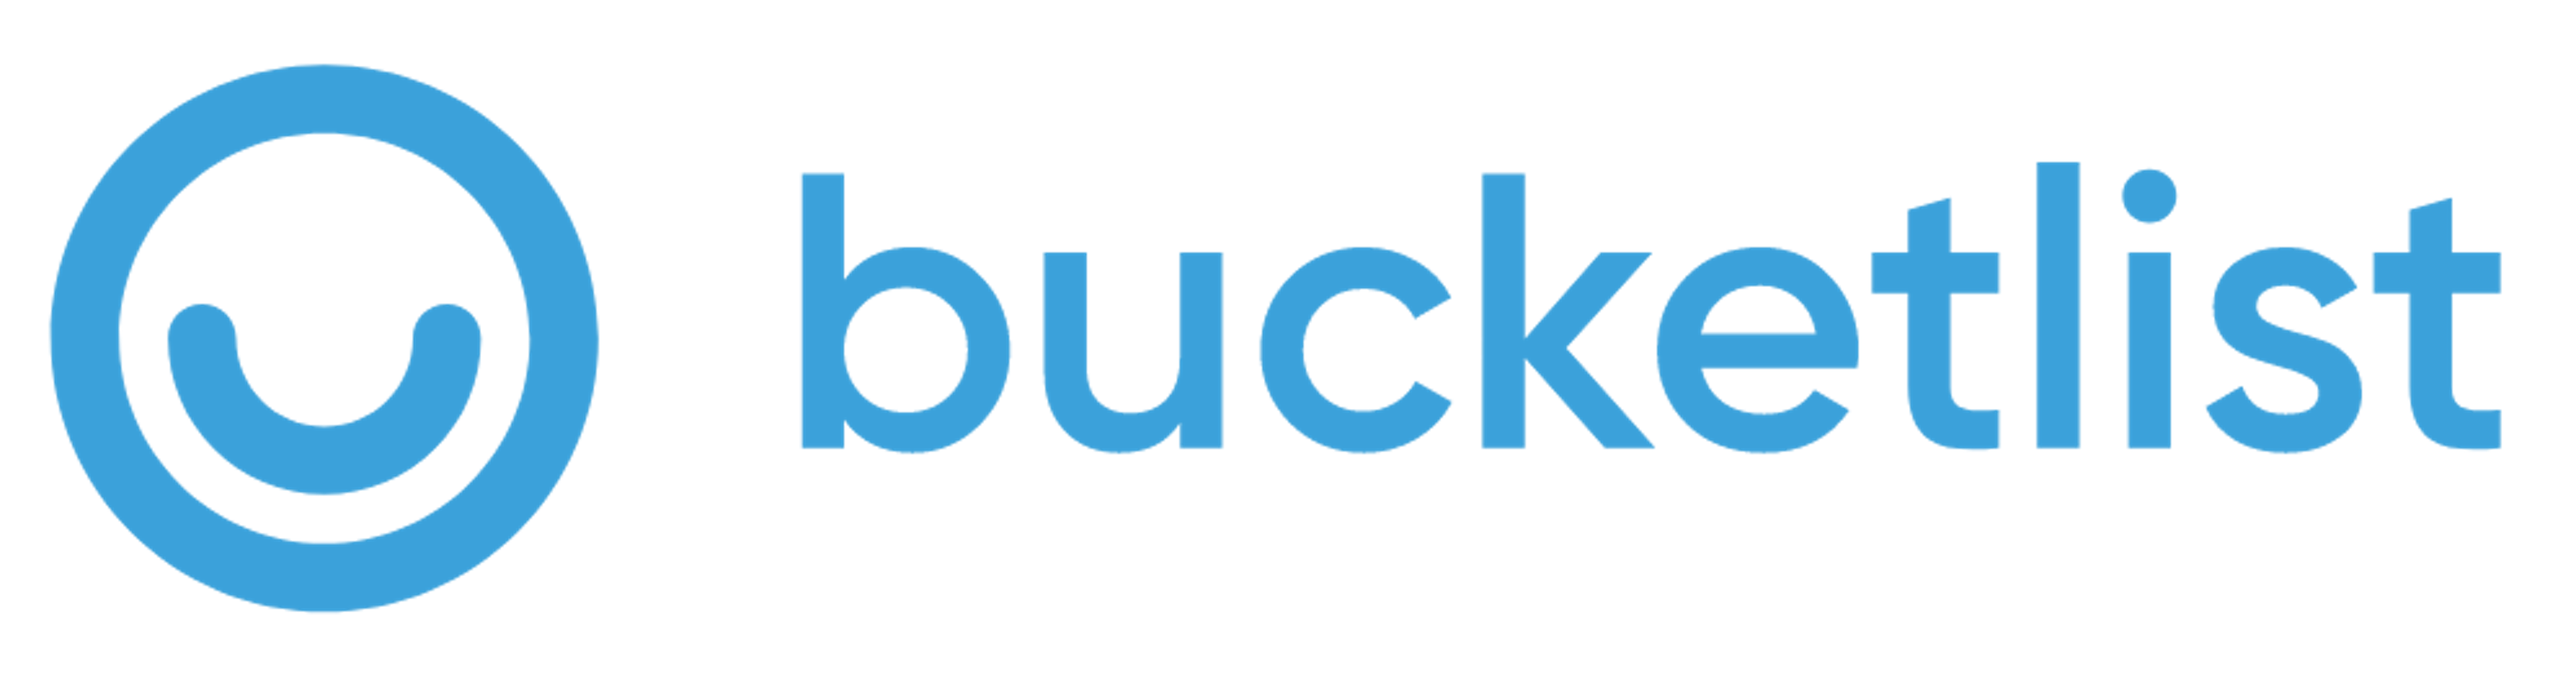 Bucketlist Logo